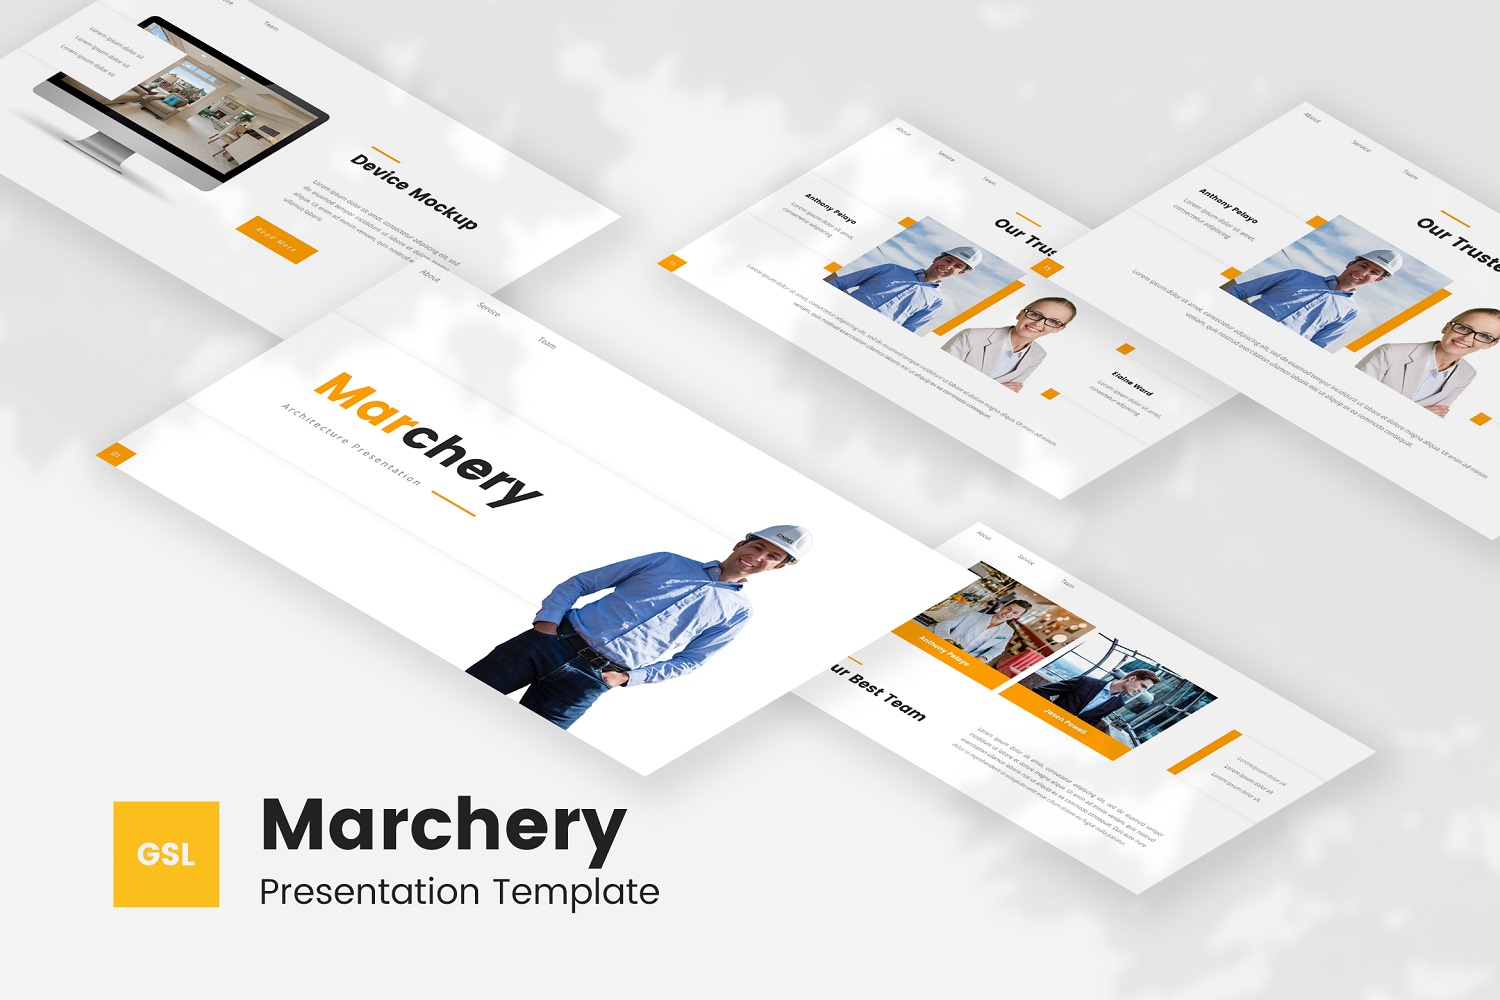 Marchery - Architecture Google Slides Template